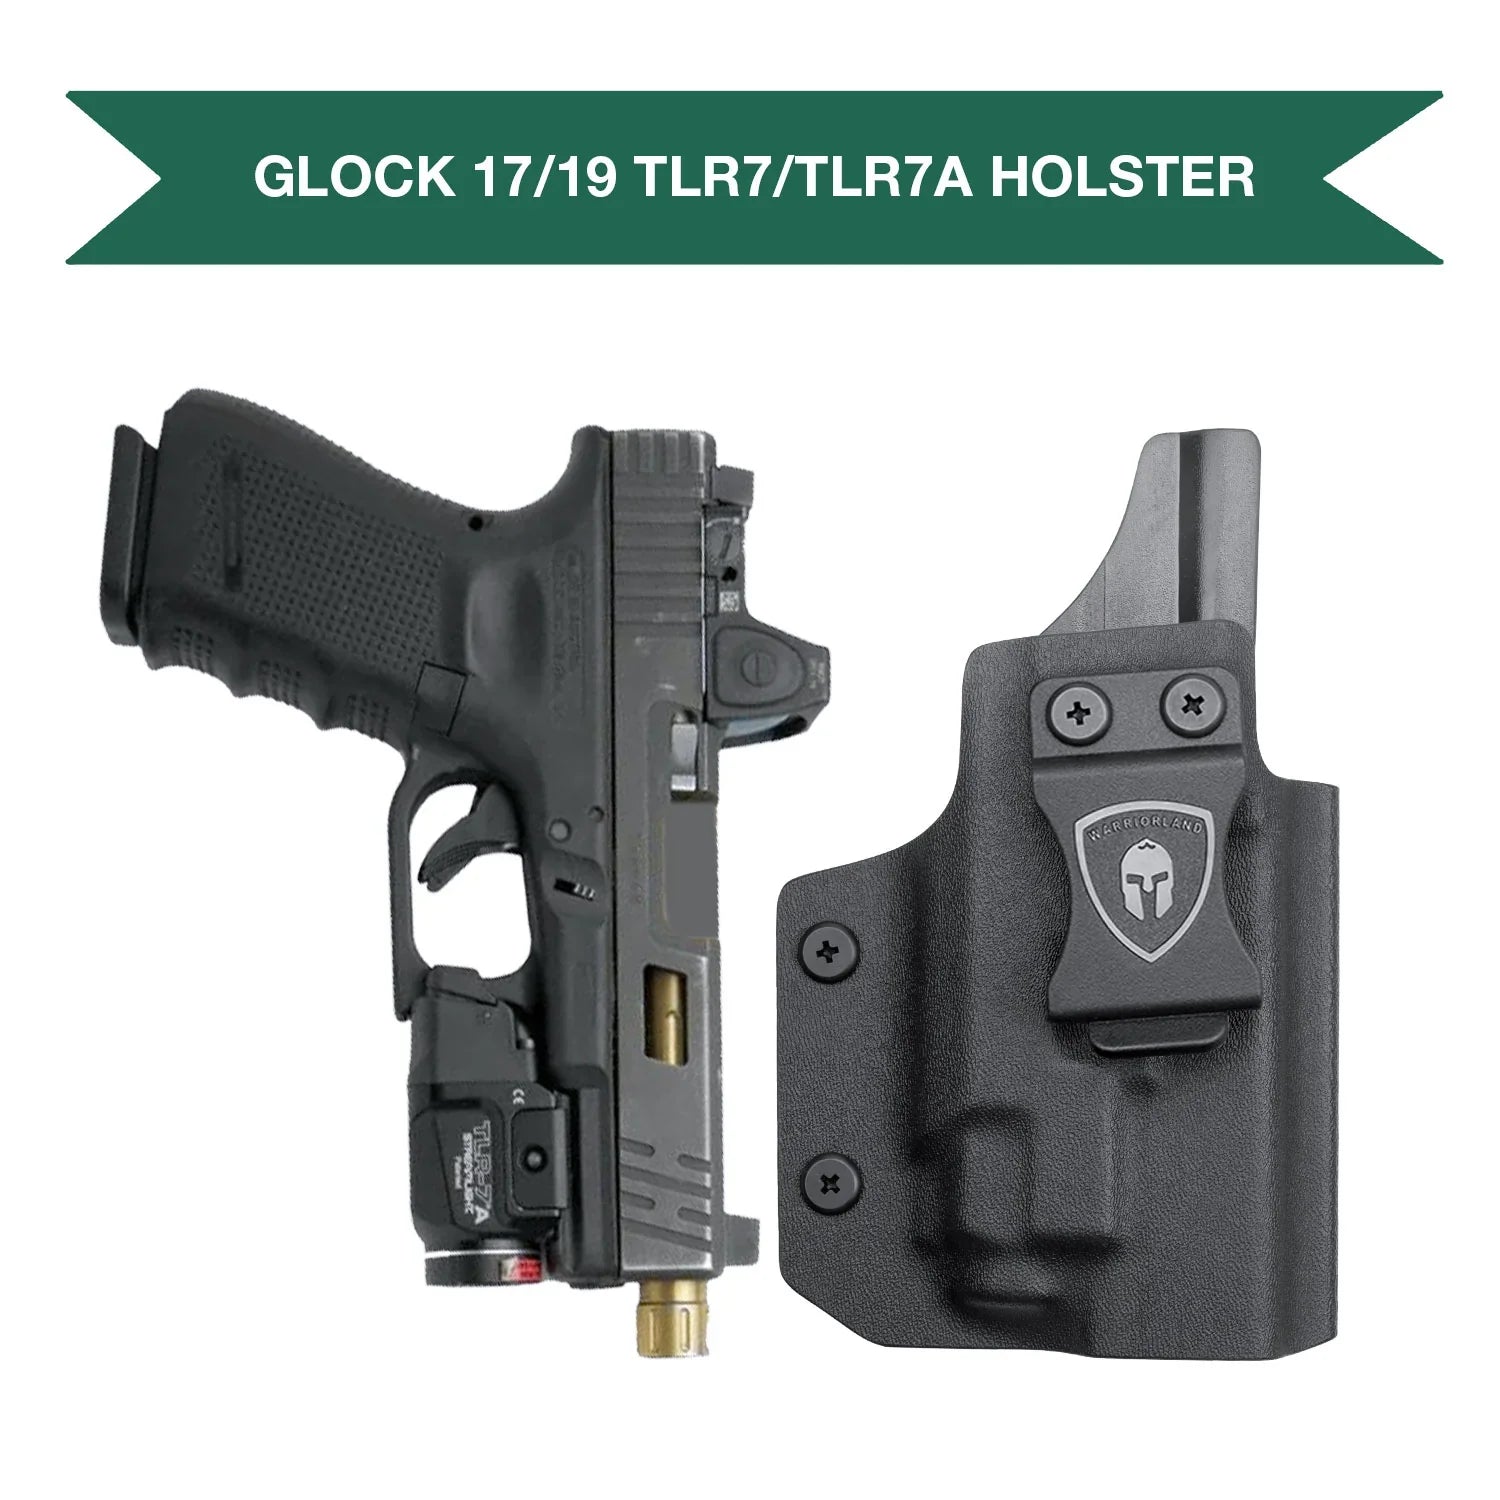 Glock 22 Gen 5 Red Dot Optic Cut IWB Holster